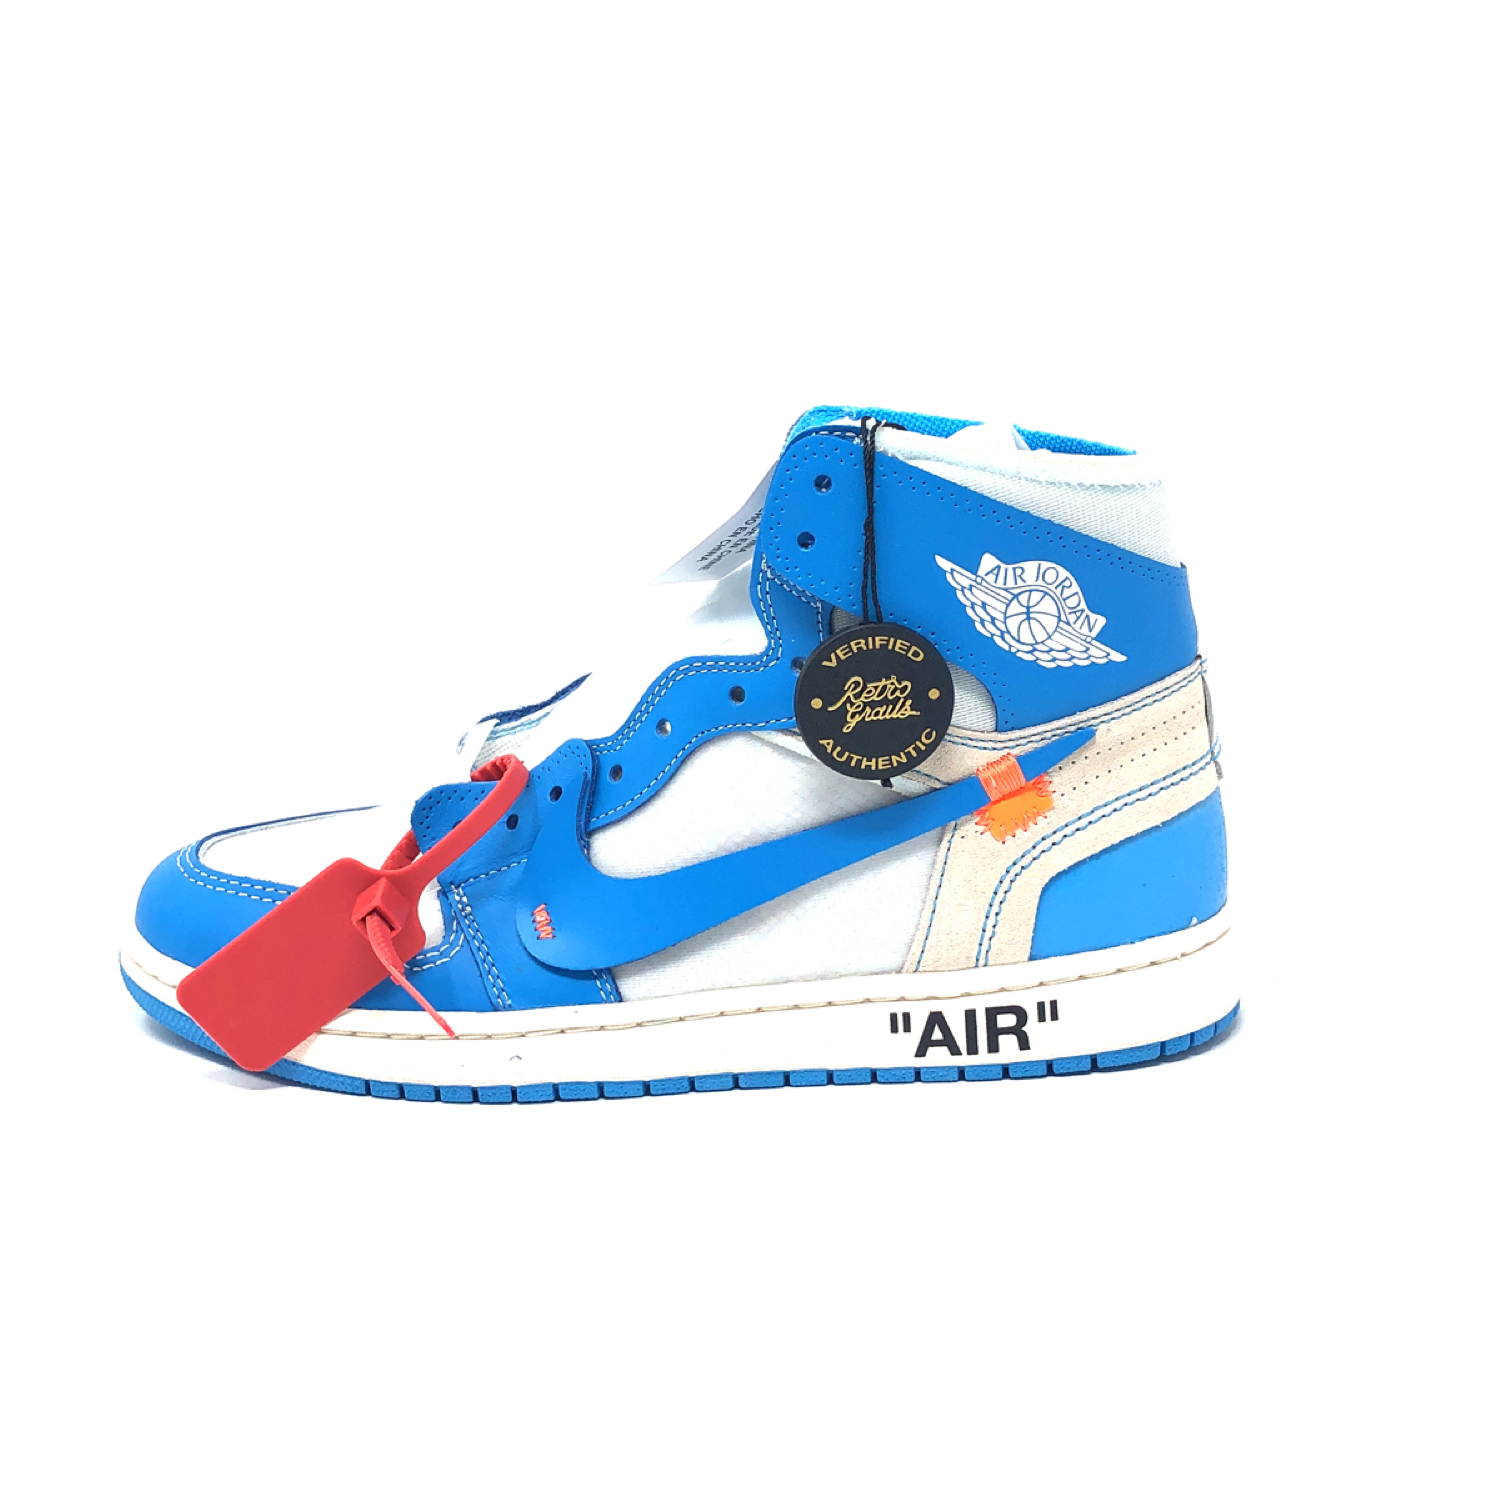 OFF WHITE Air Jordan 1 UNC Blue Release Date